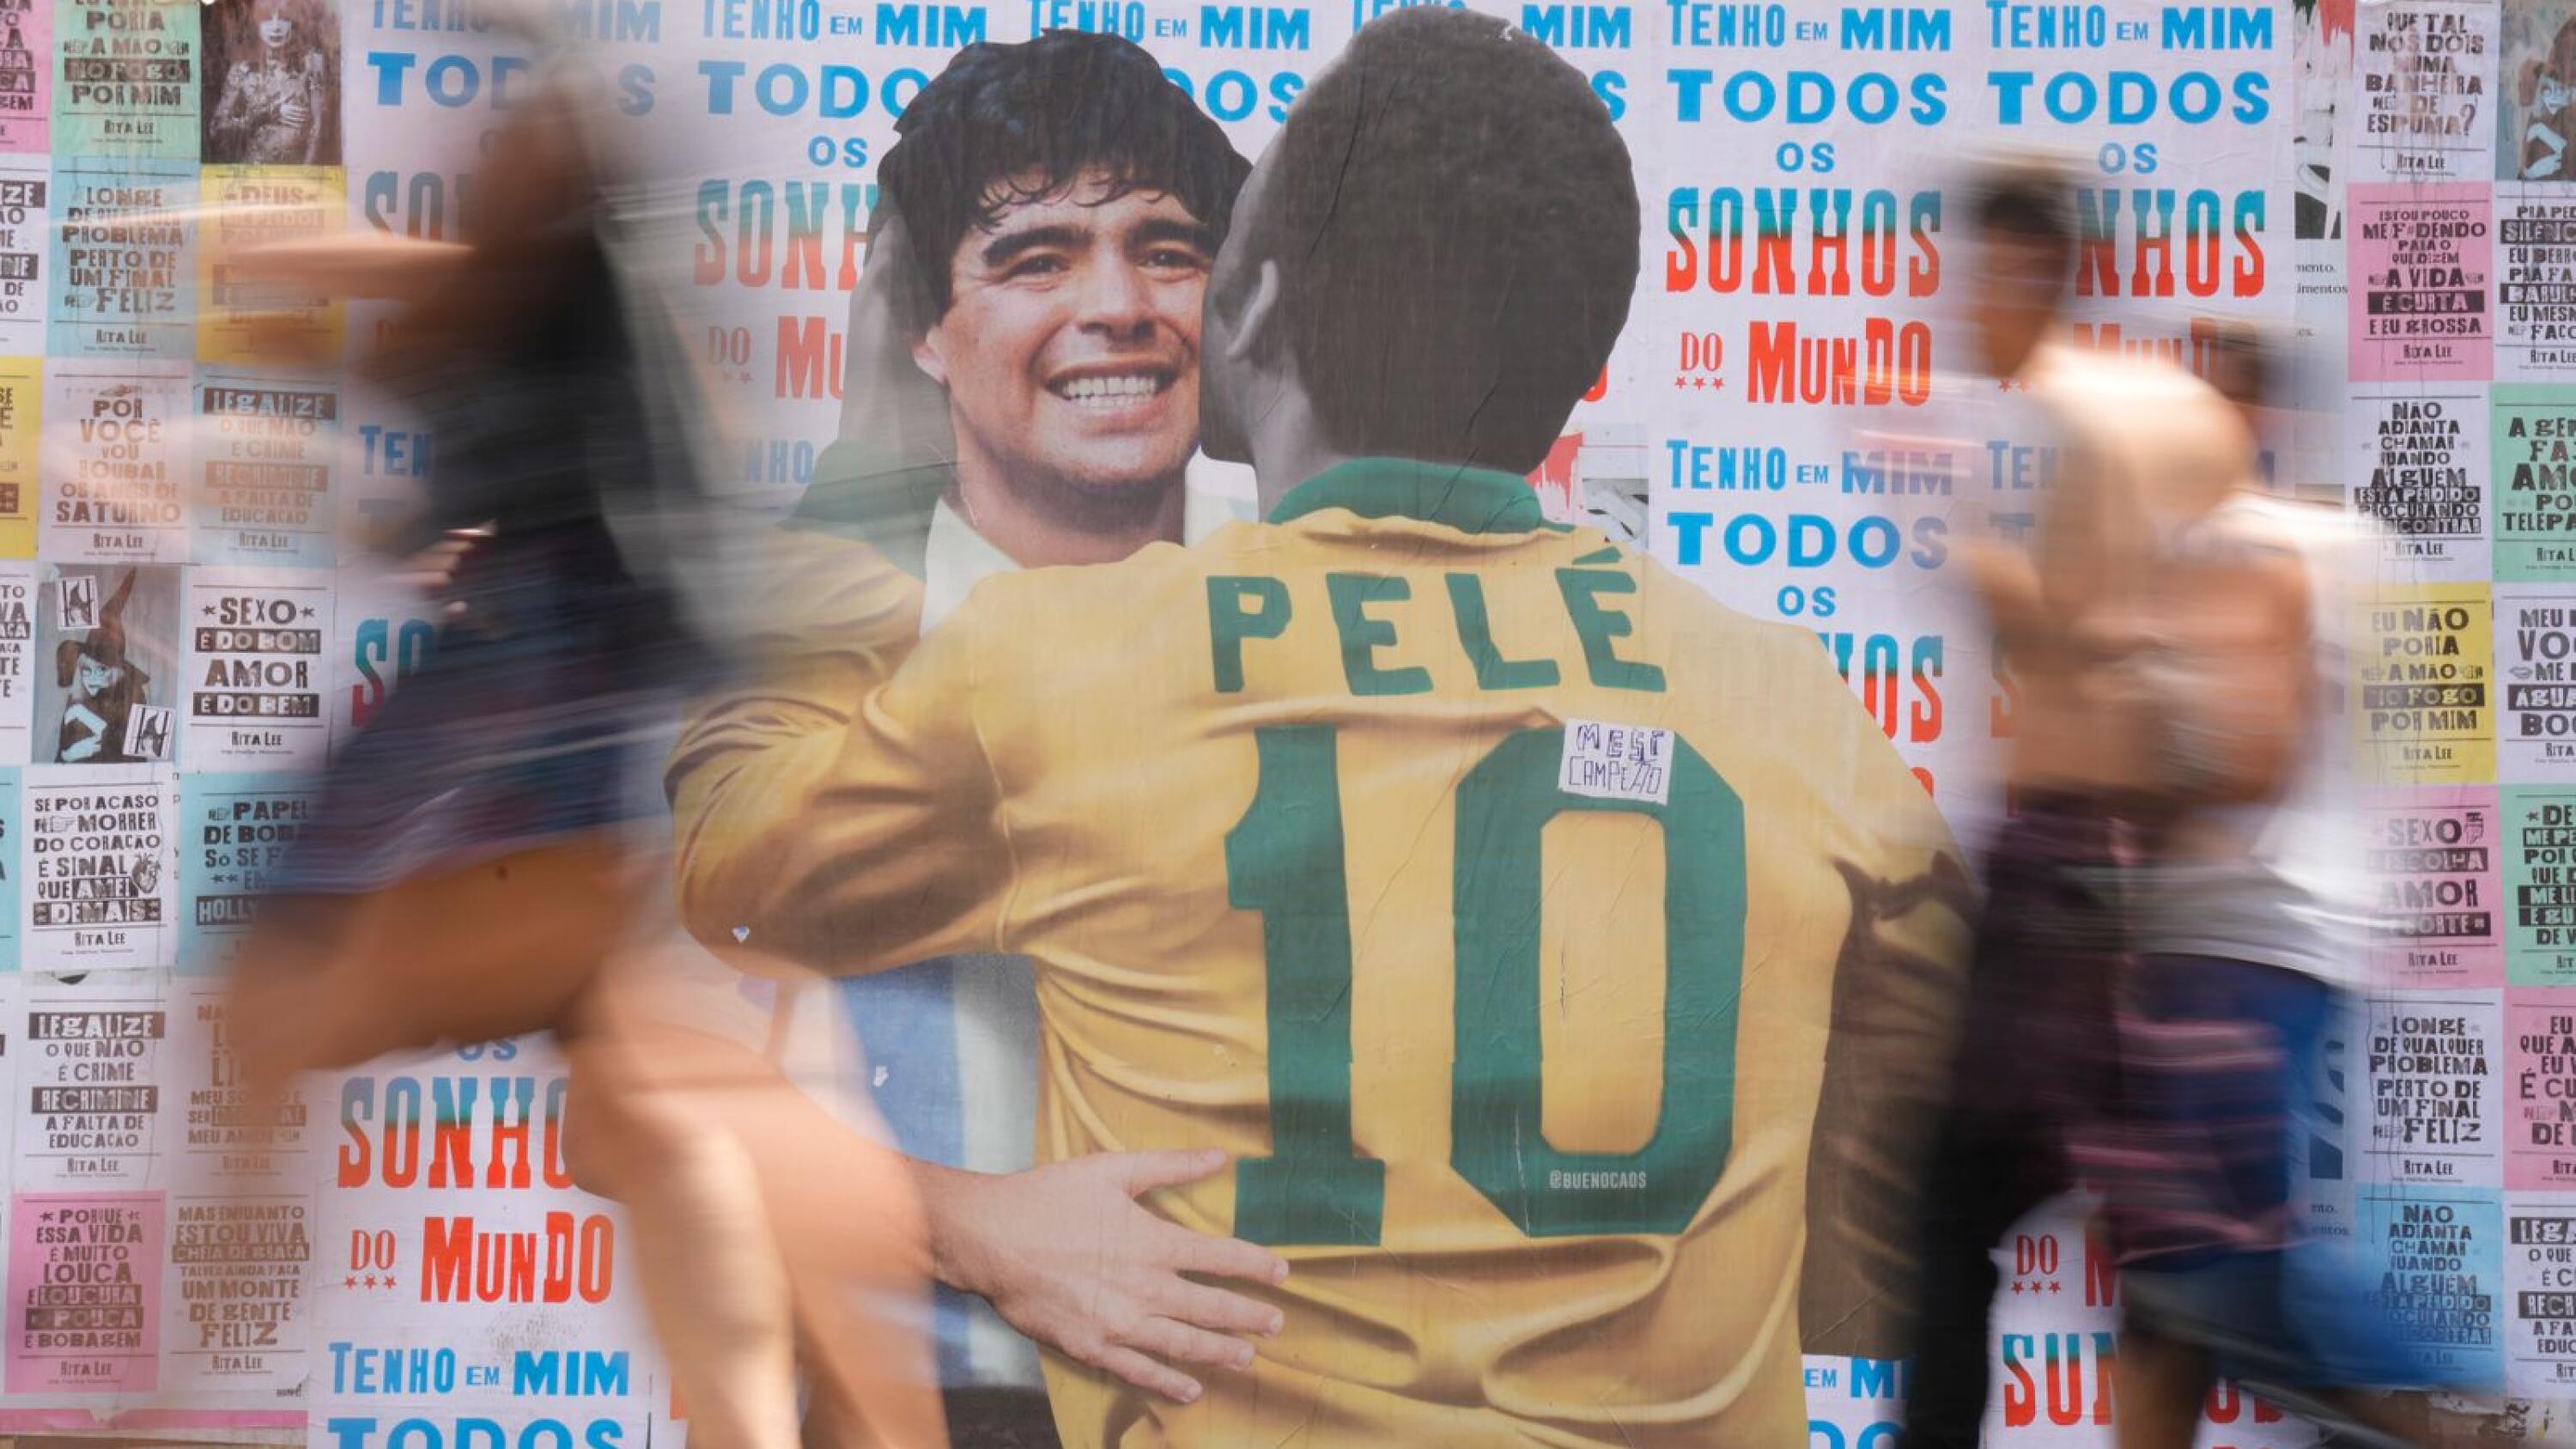 Who was greater, Pele or Maradona?